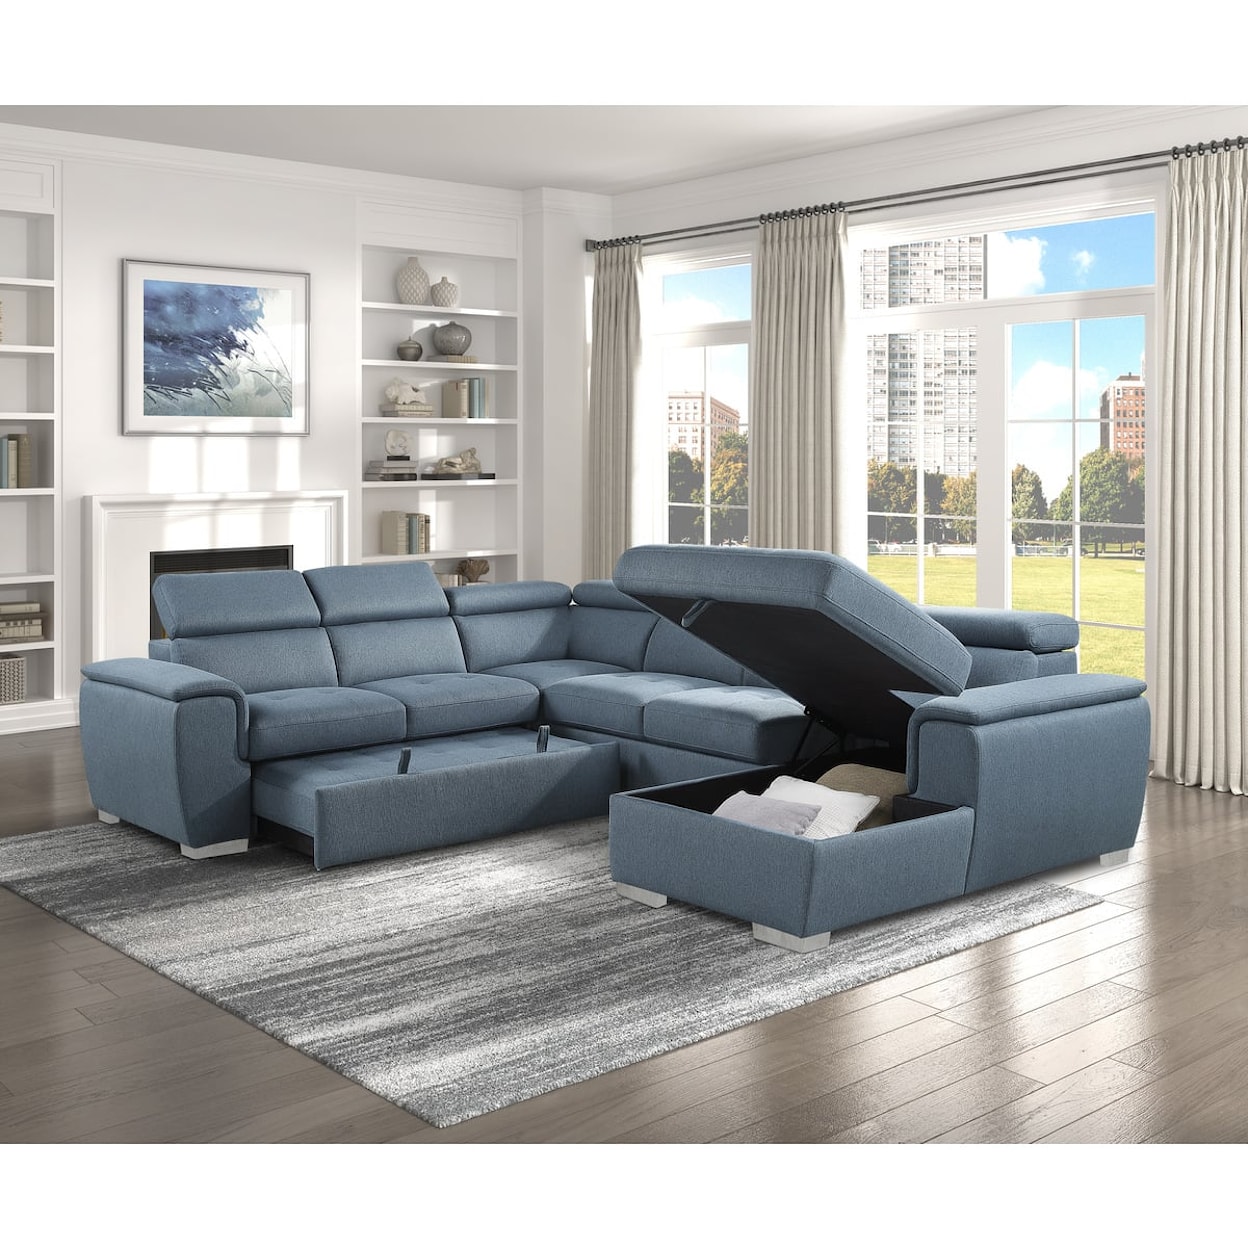 Homelegance Furniture Berel 4-Piece Sectional Sofa